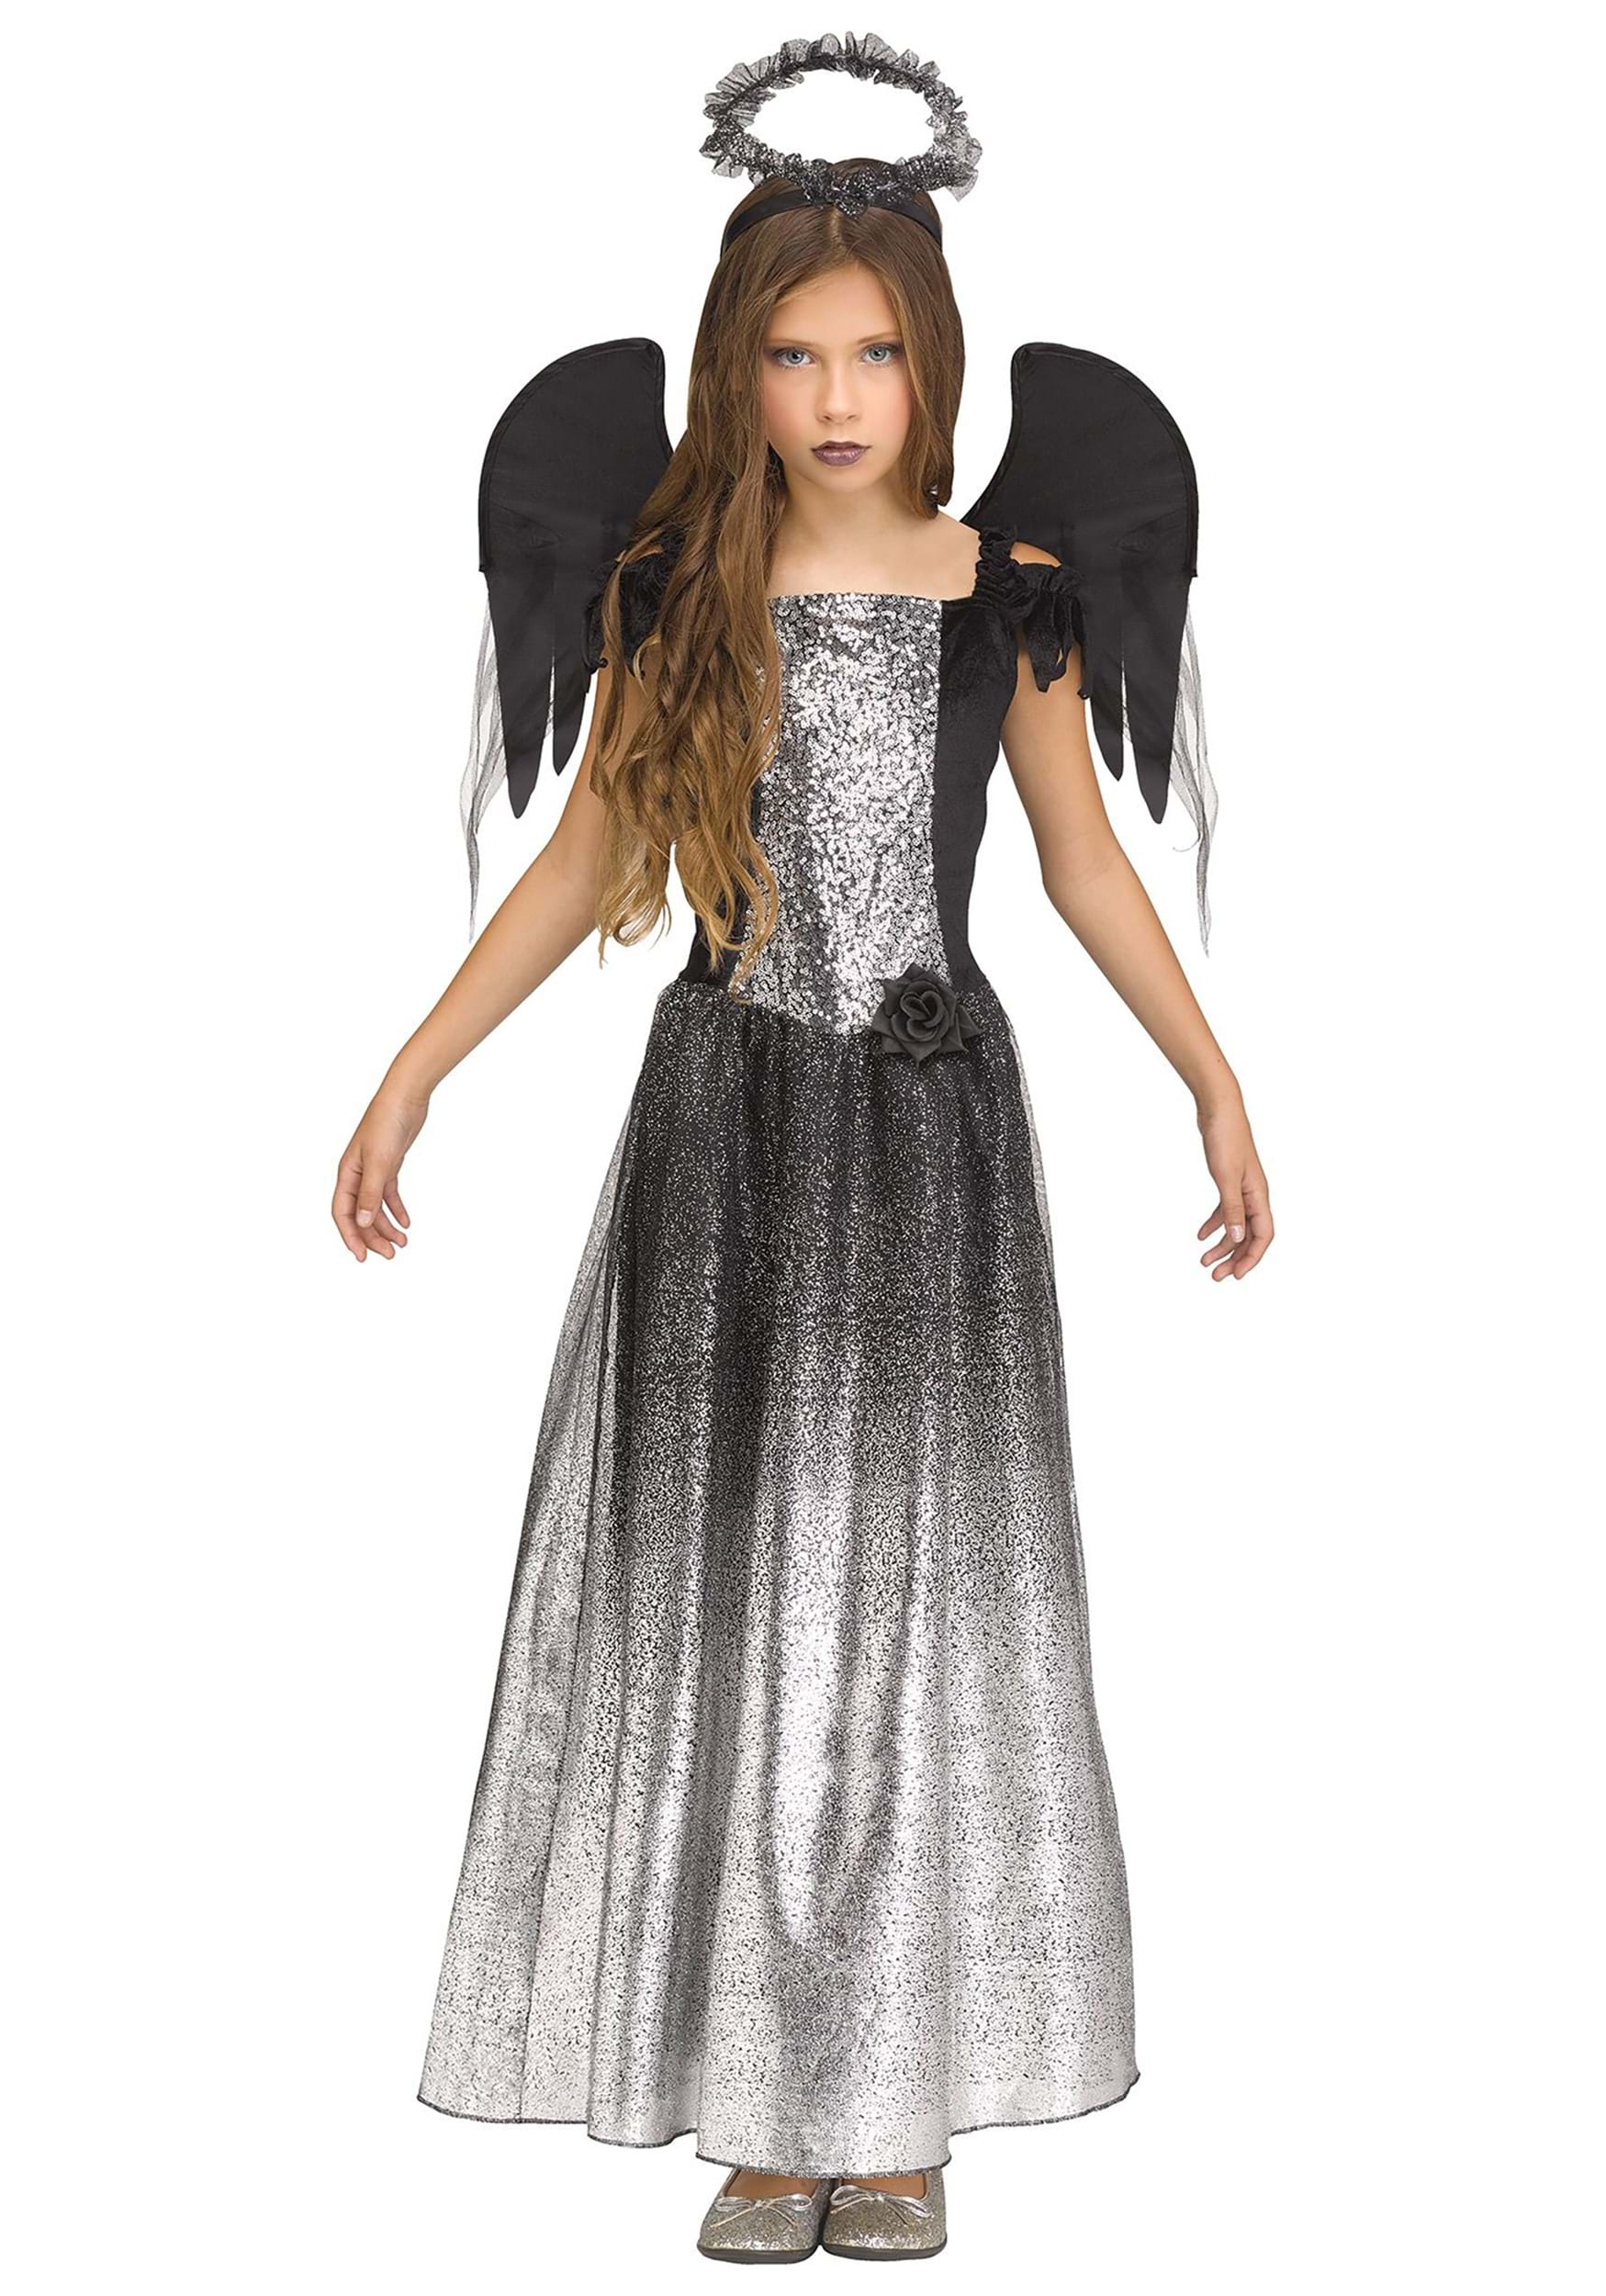 Onyx Angel Costume for Girls